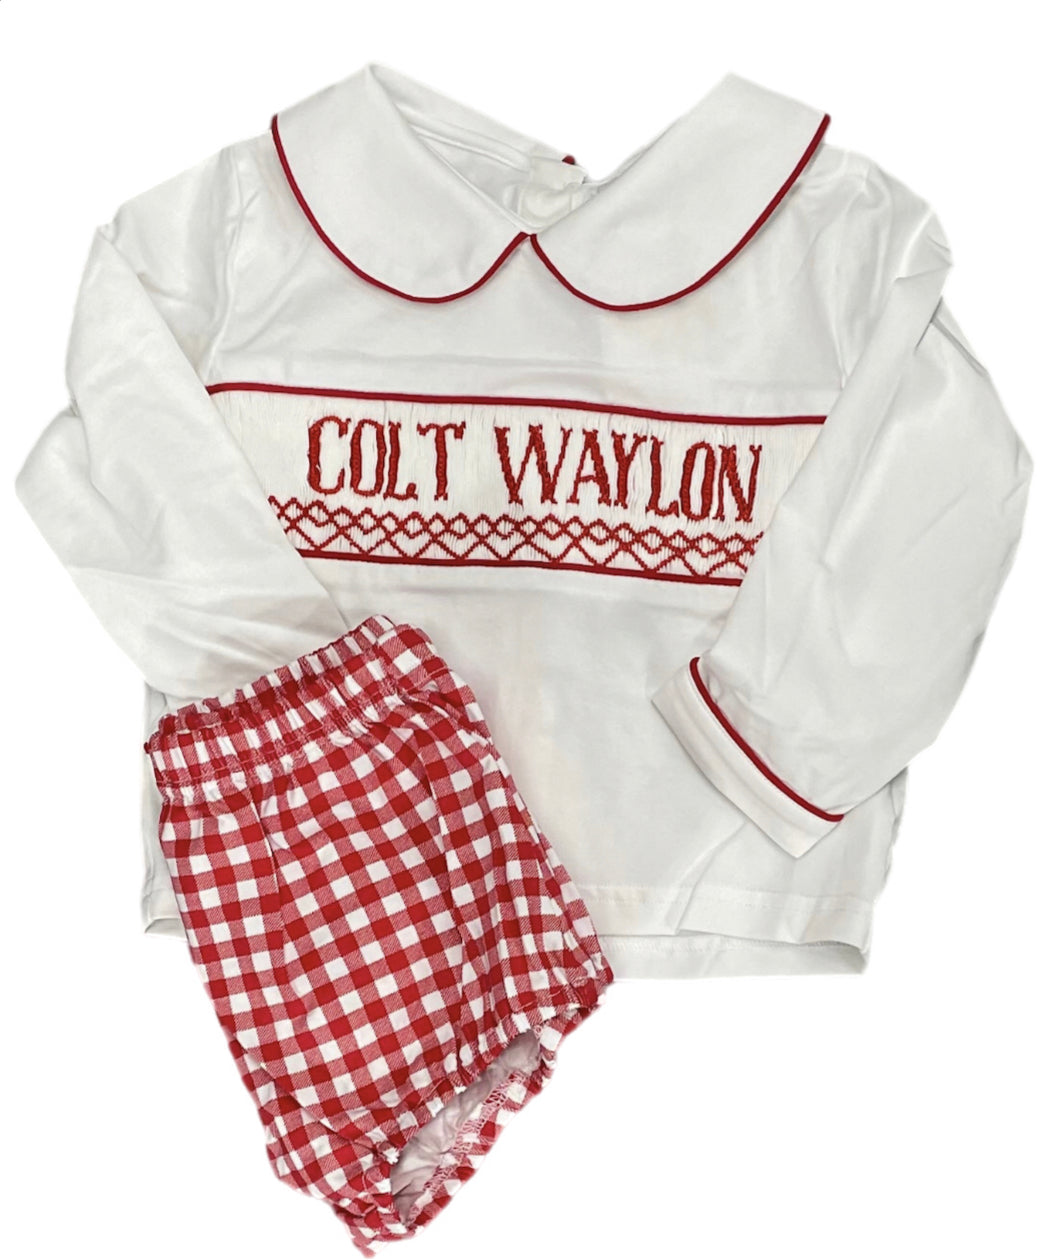 RTS: Boys Red Gingham Name Smock Knit Diaper Set “Colt Waylon”